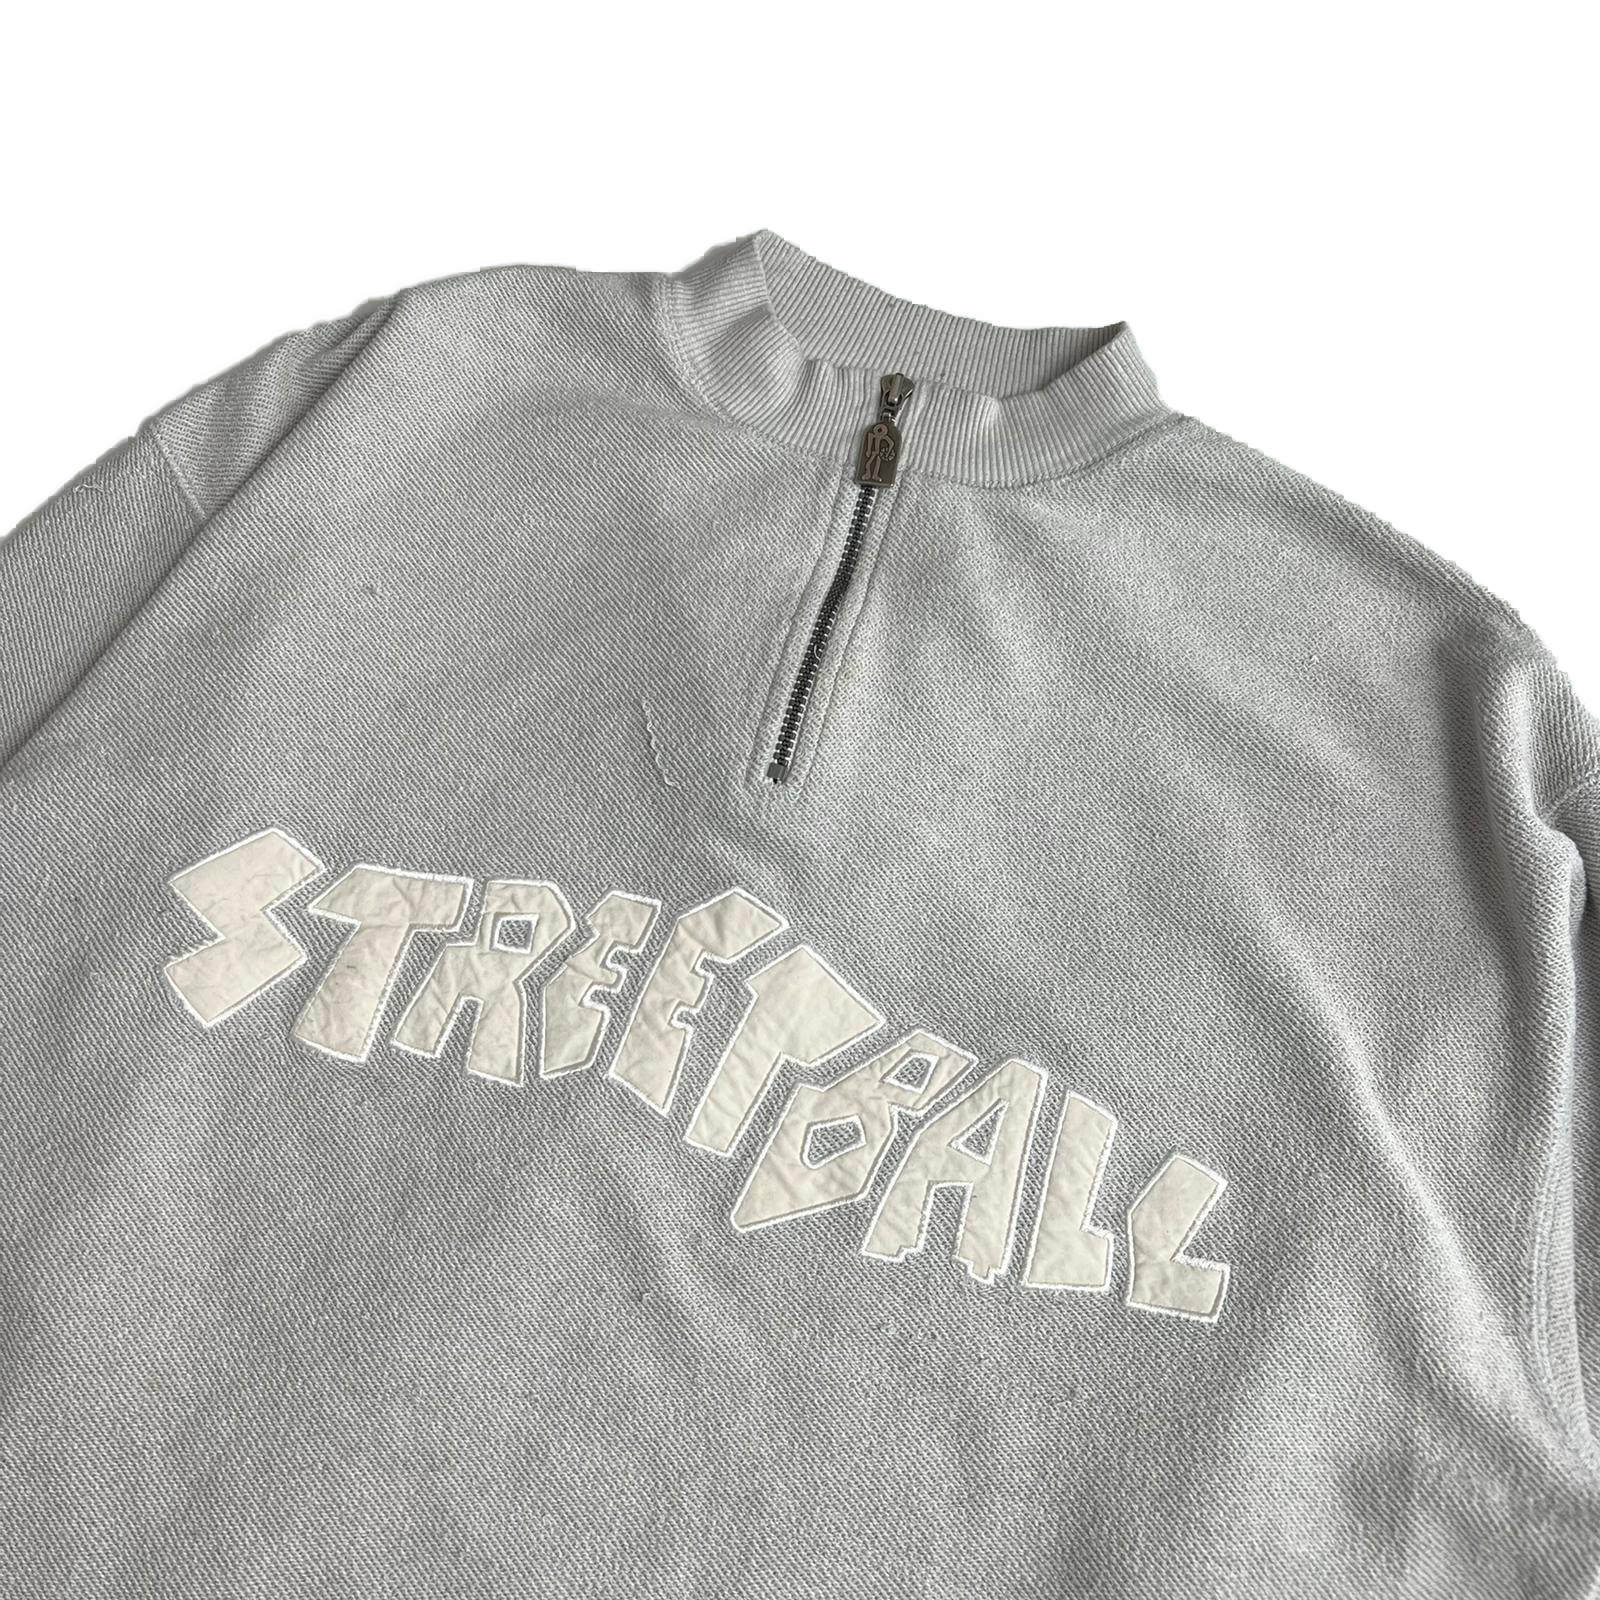 90's Adidas Streetball 1/4 zip sweatshirt